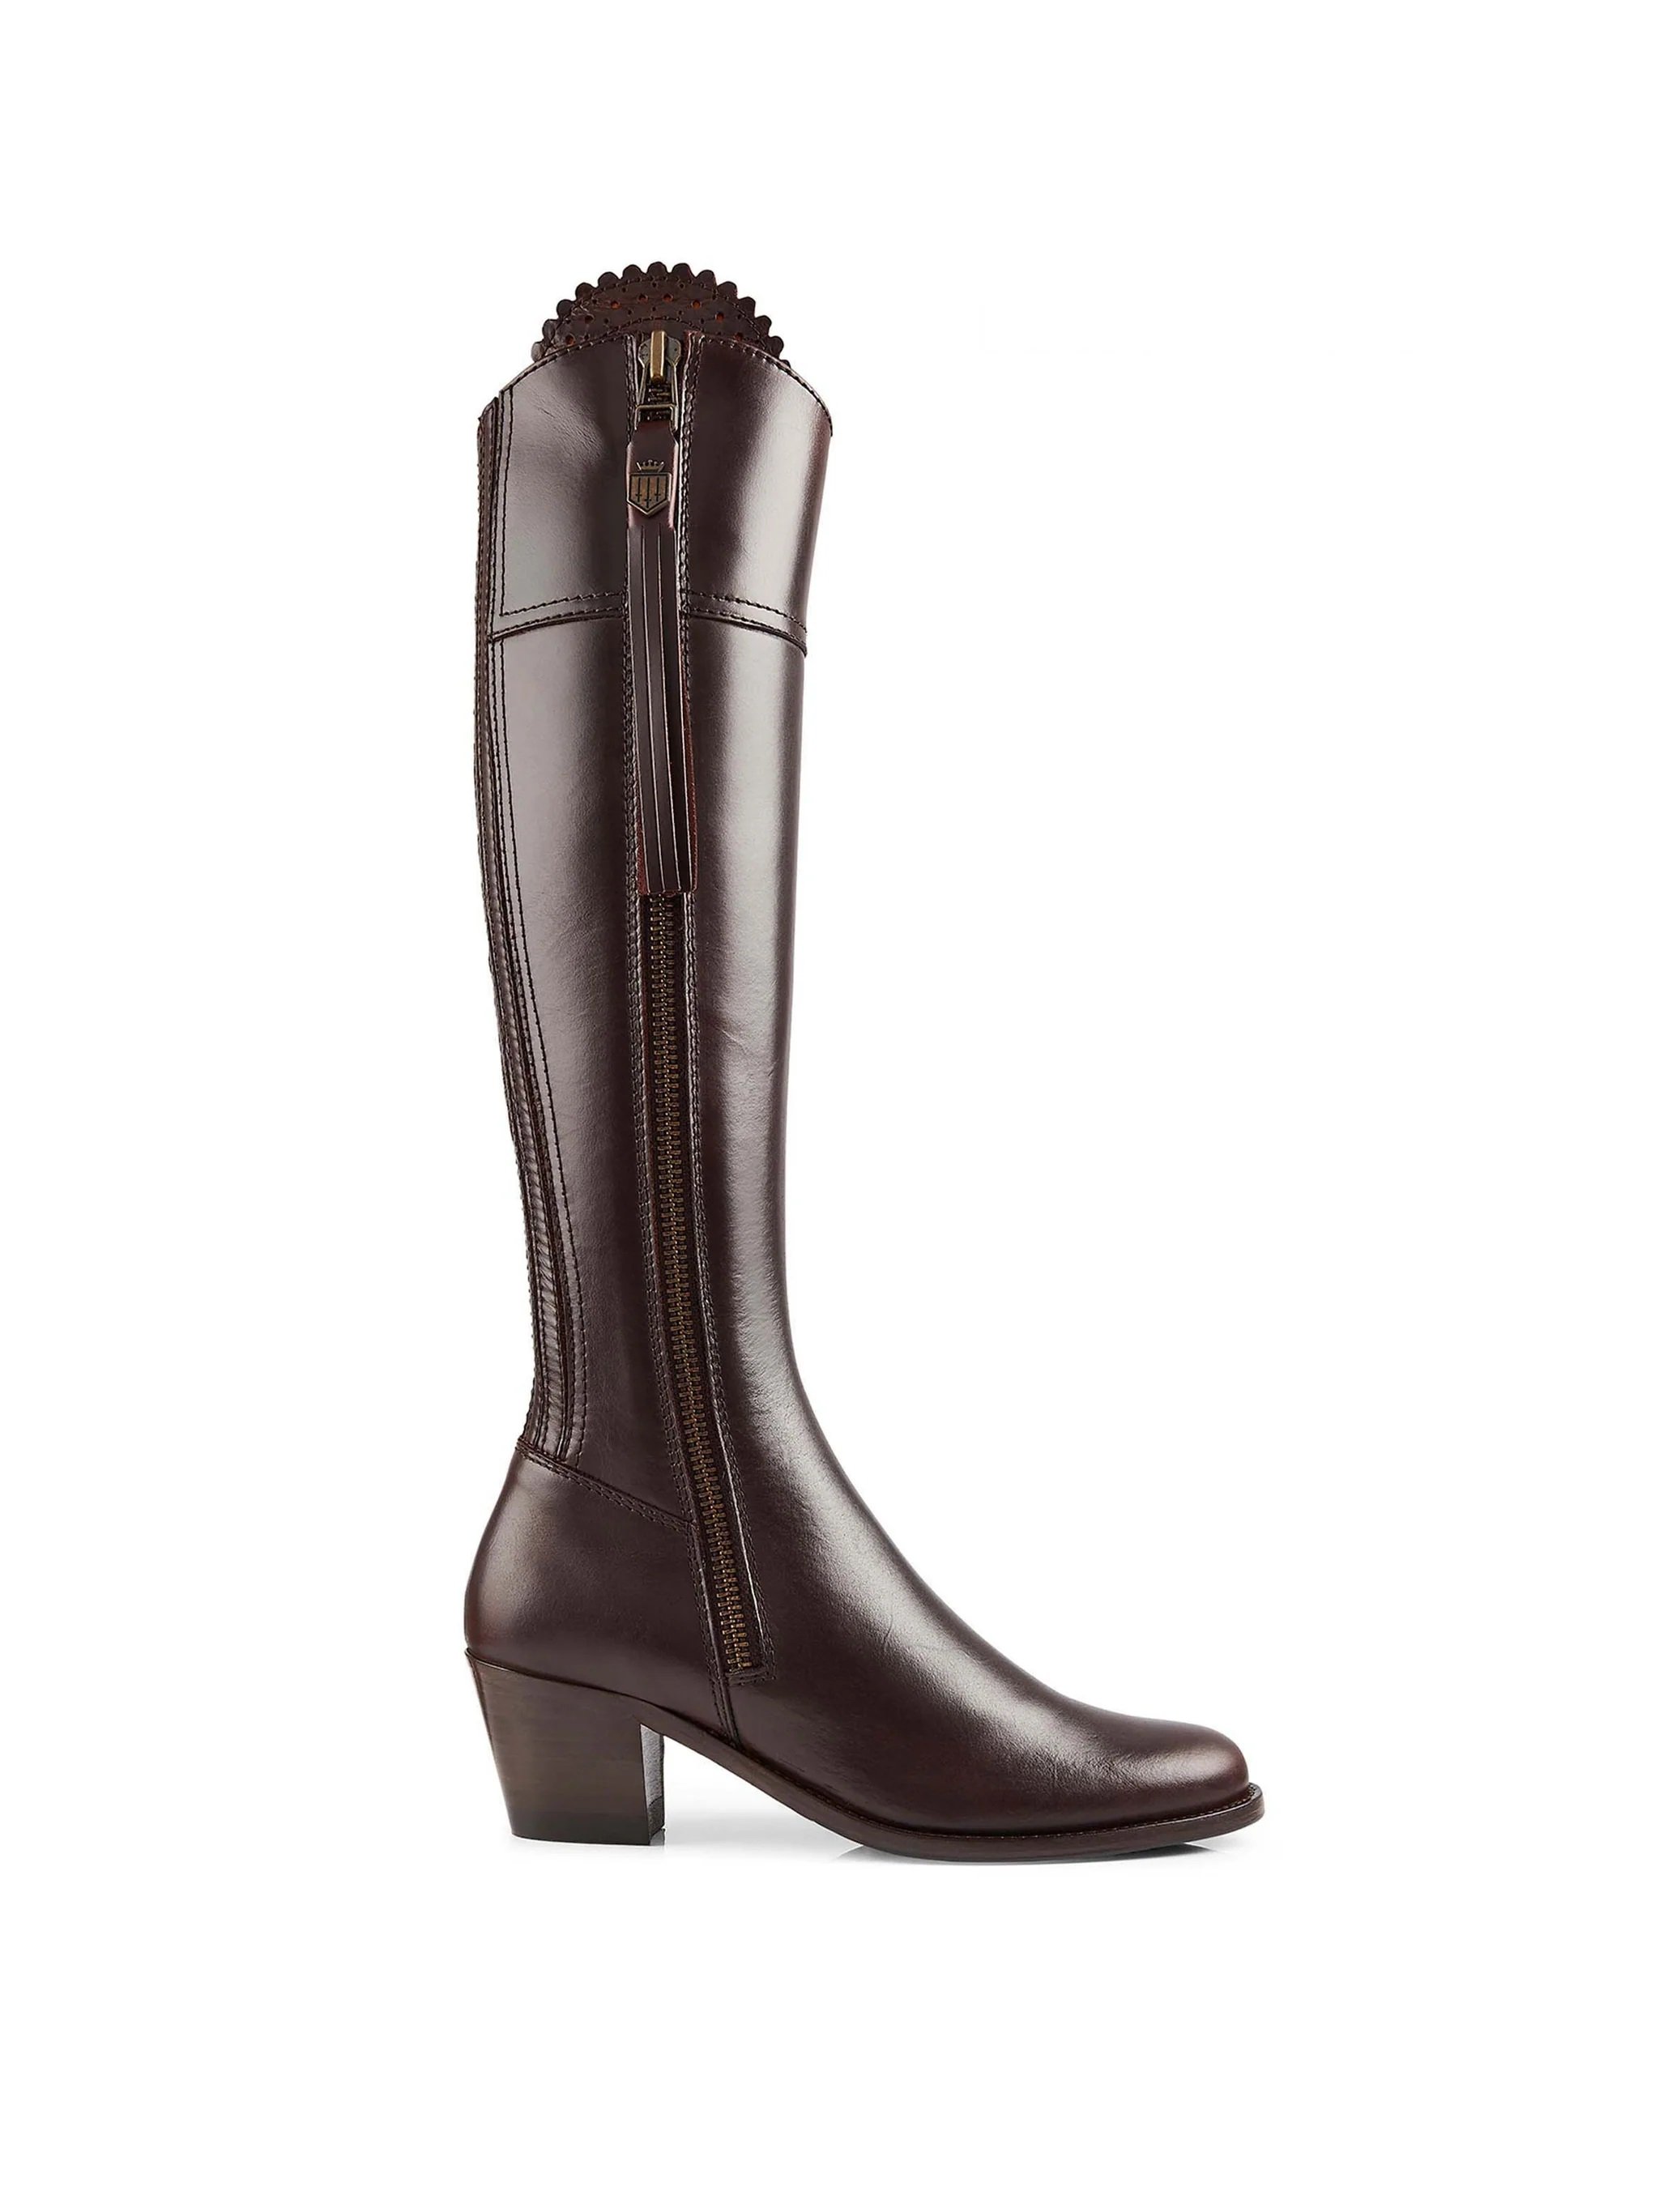 Fairfax & Favor The Regina Heeled Boots in Mahogany Leather.jpg